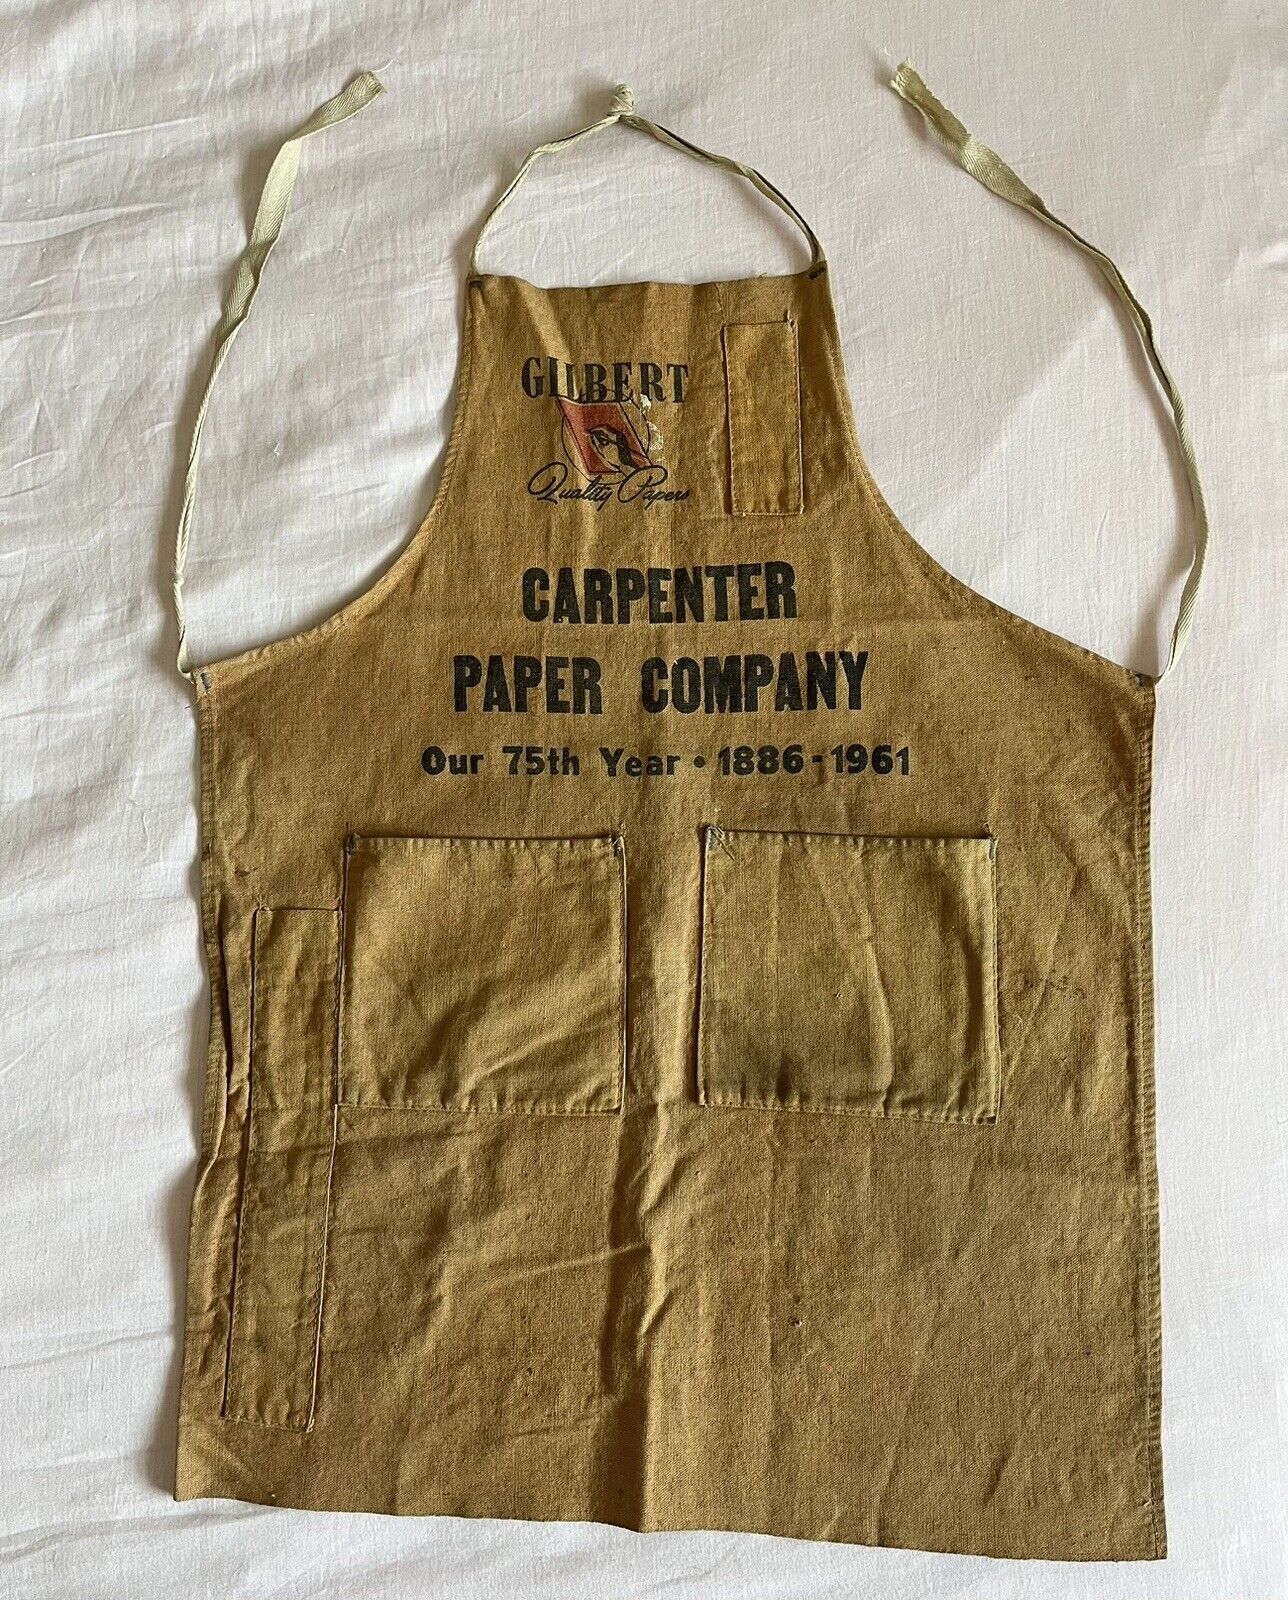 Vintage Carpenter Paper Company Apron - 75 Year Anniversary 1886-1961